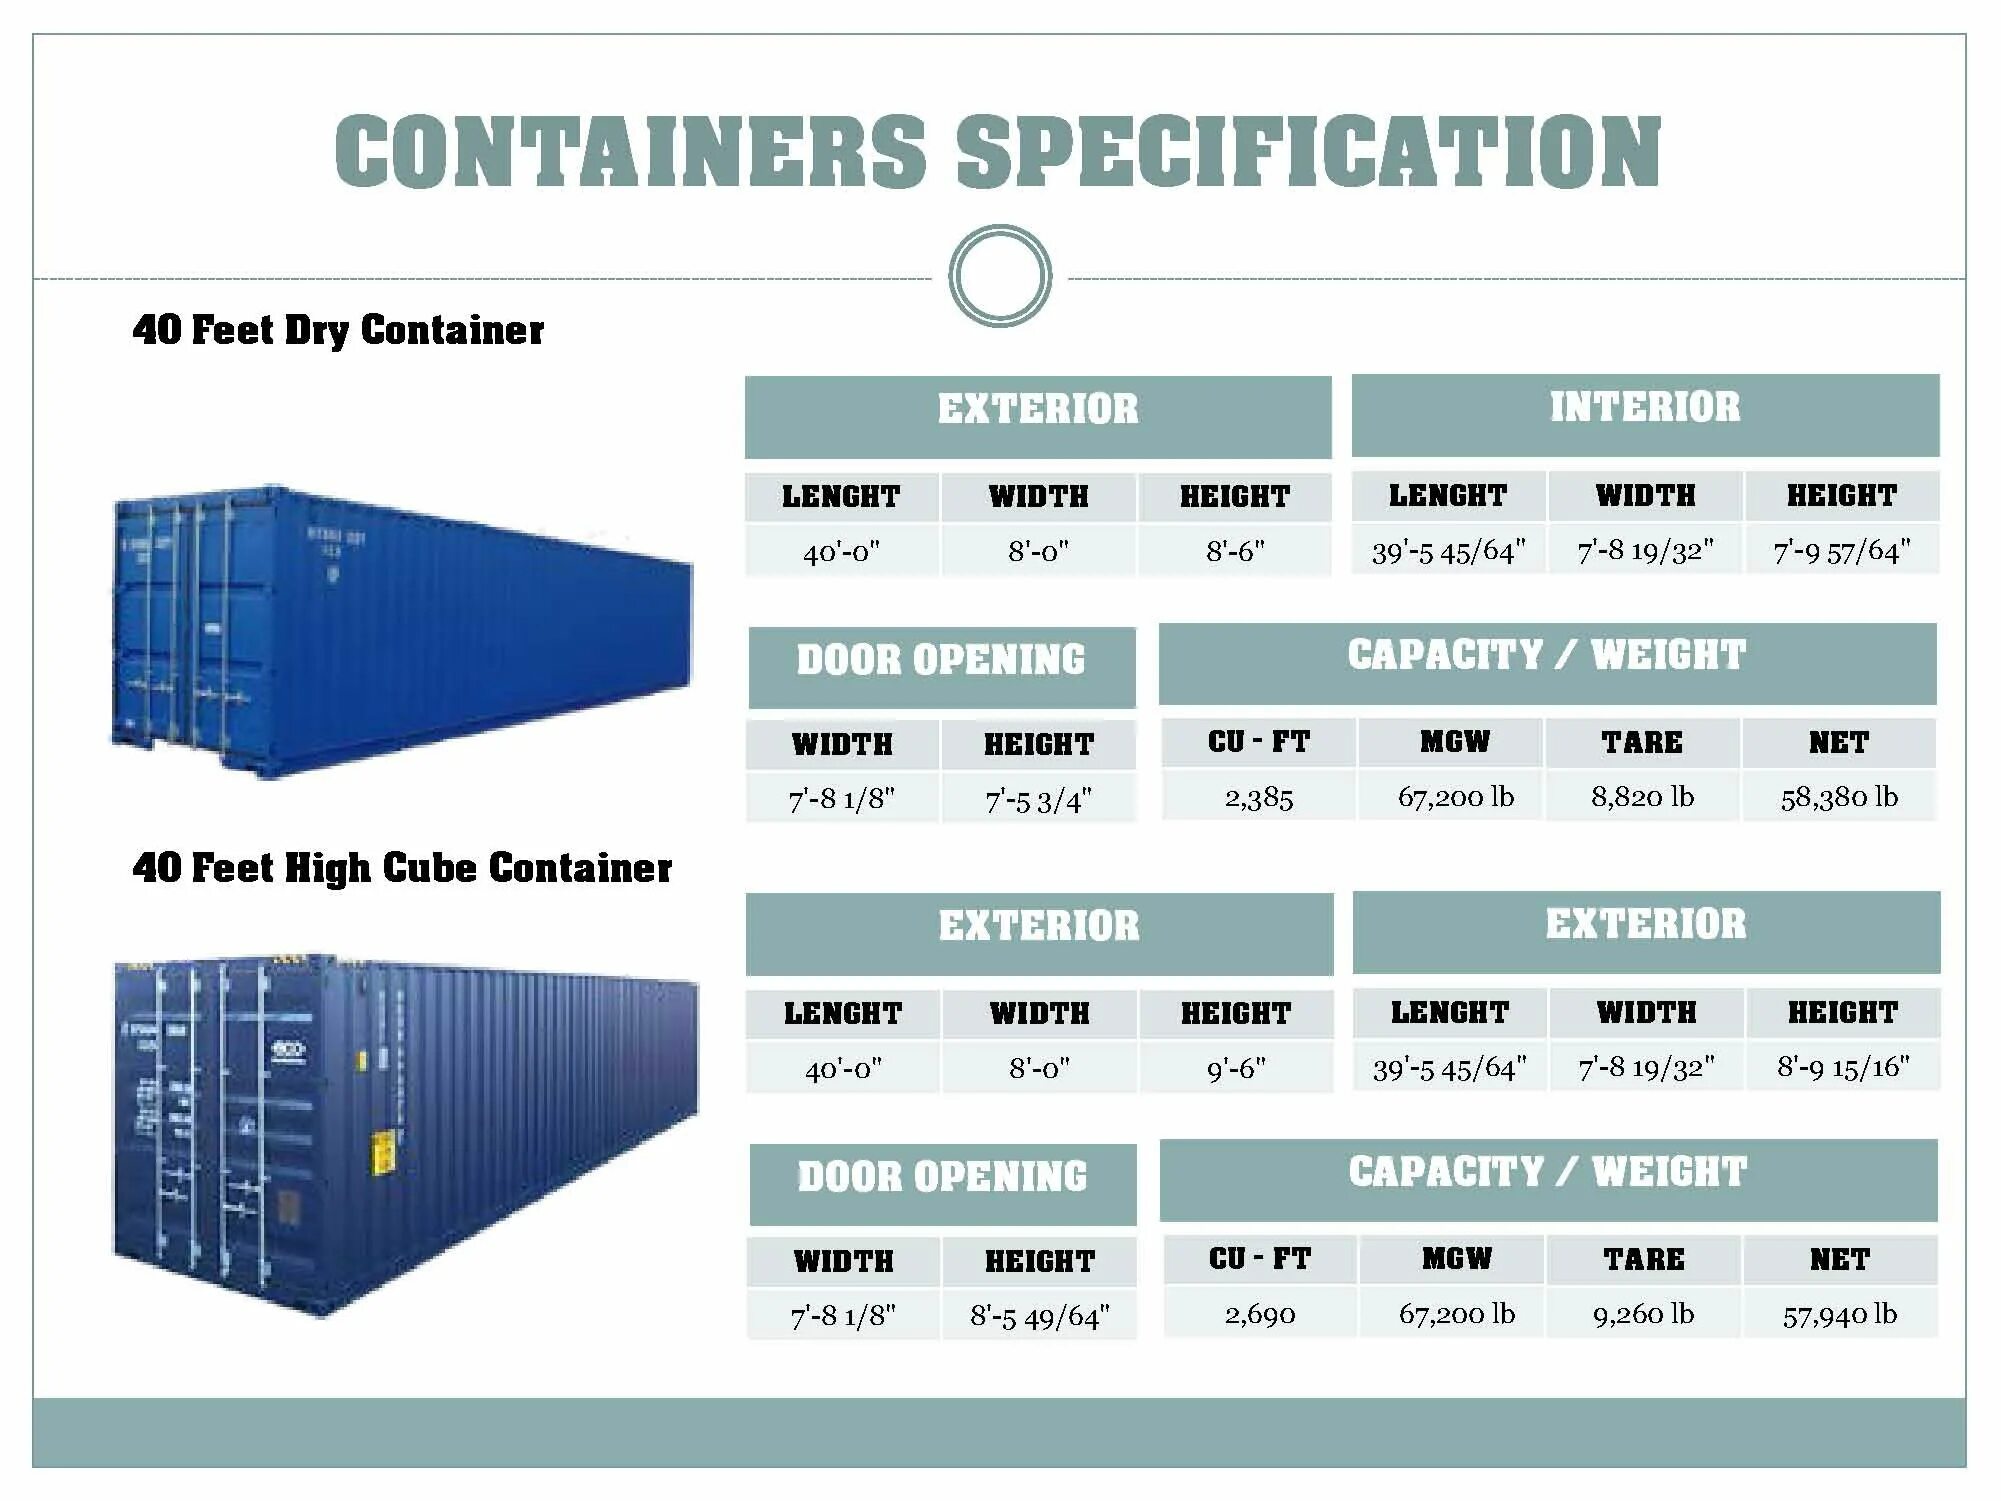 40-Футовый контейнер Dry Cube. Морской контейнер Dry Cube 40 футов l. Контейнер 40 HC/hq (High Cube). Габариты 40 фут контейнера High Cube.